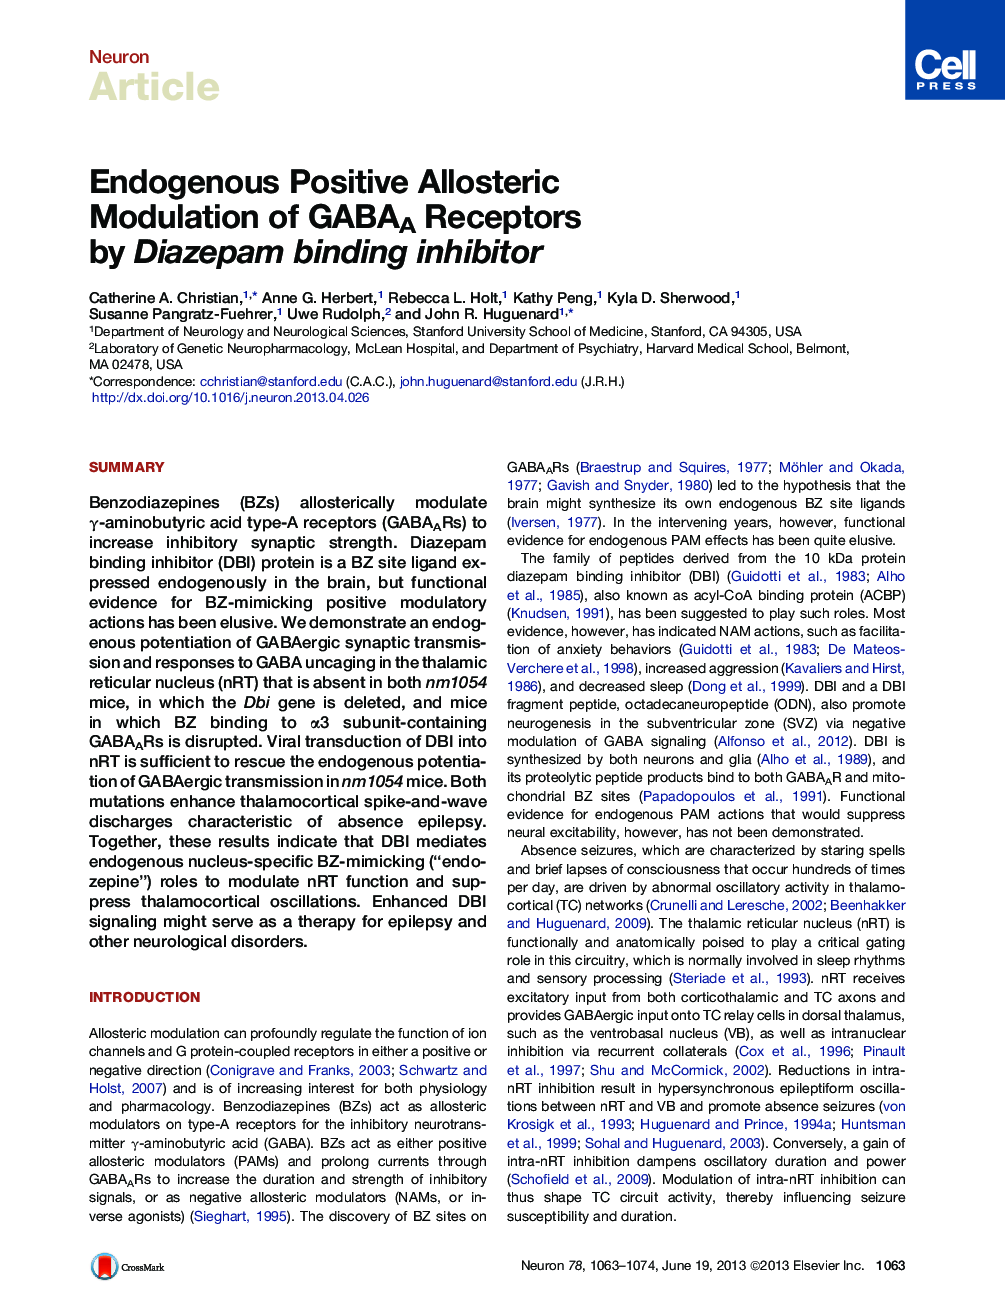 Endogenous Positive Allosteric Modulation of GABAA Receptors by Diazepam binding inhibitor